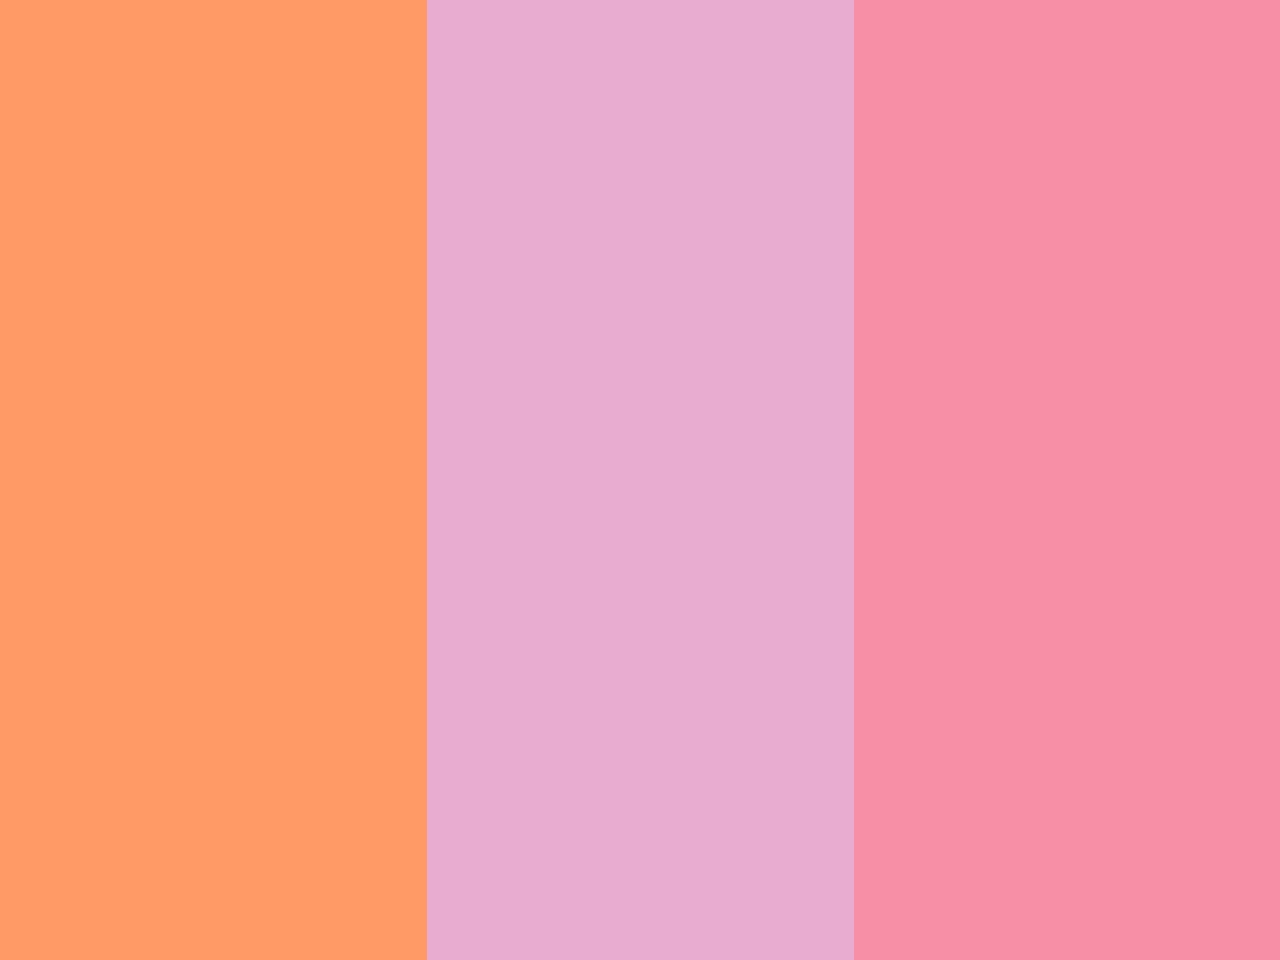   pink orange pink pearl pink sherbet three color backgroundjpg